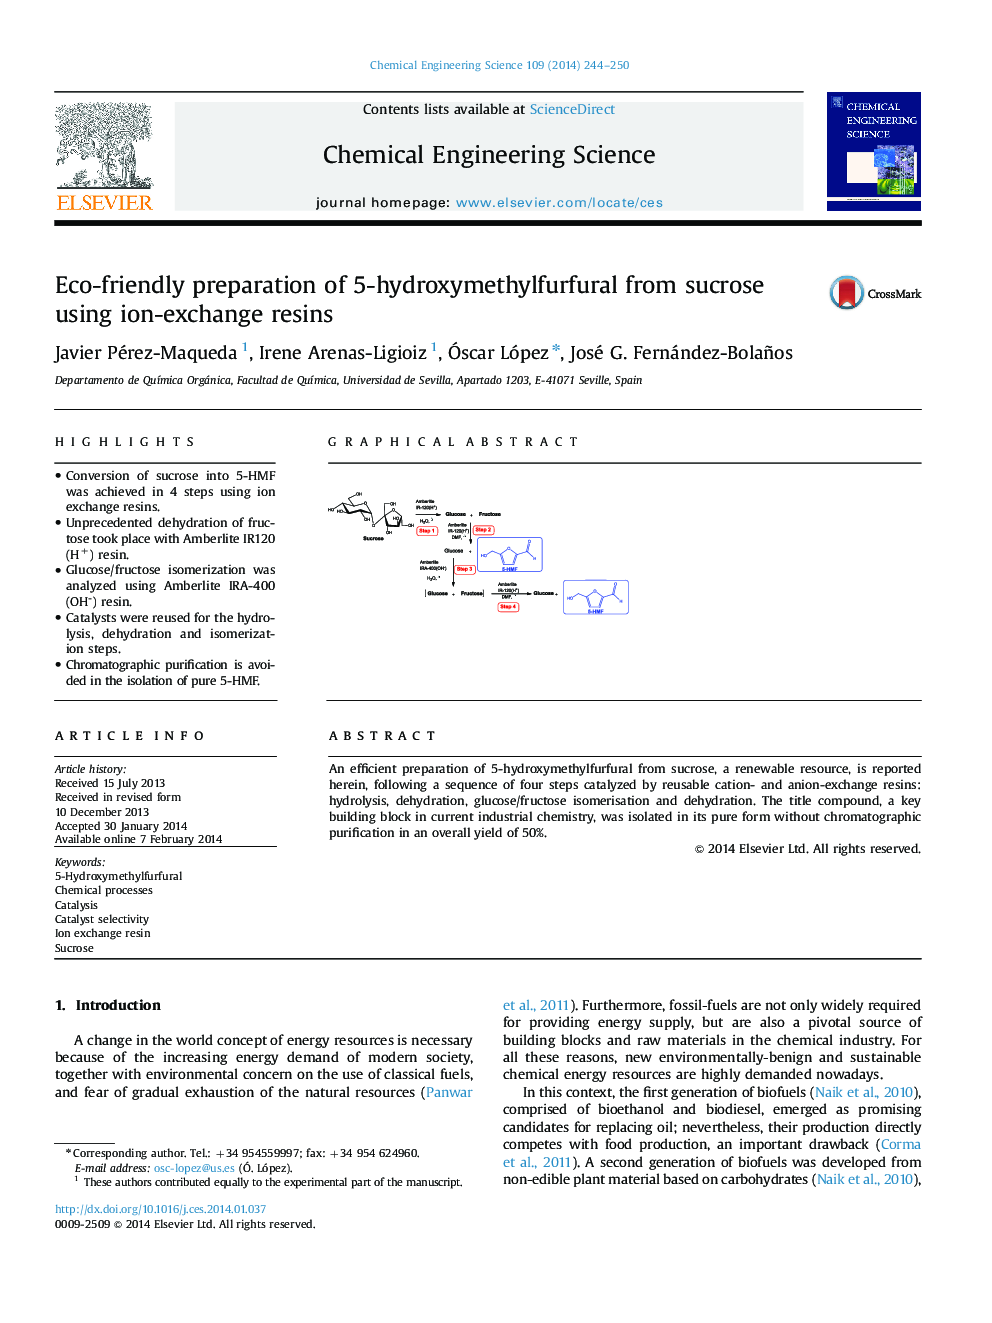 Eco-friendly preparation of 5-hydroxymethylfurfural from sucrose using ion-exchange resins